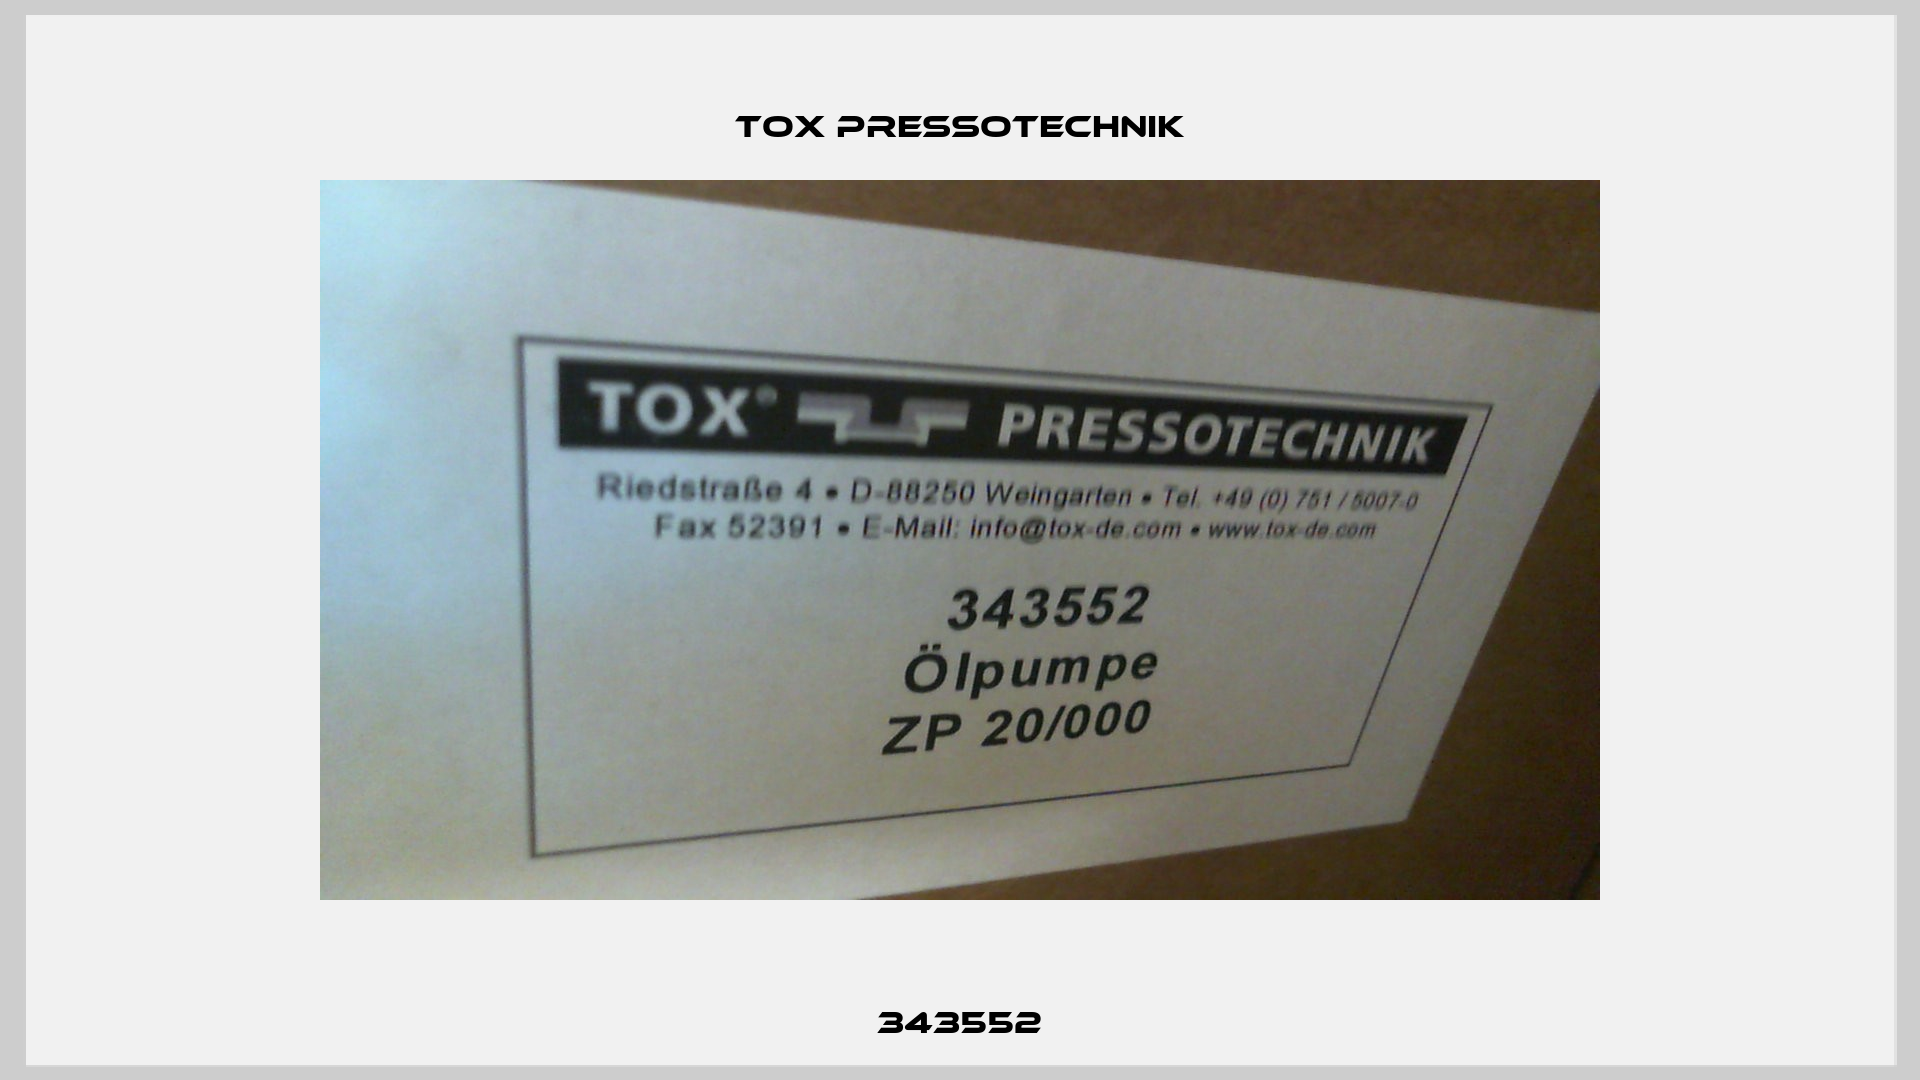 343552 Tox Pressotechnik